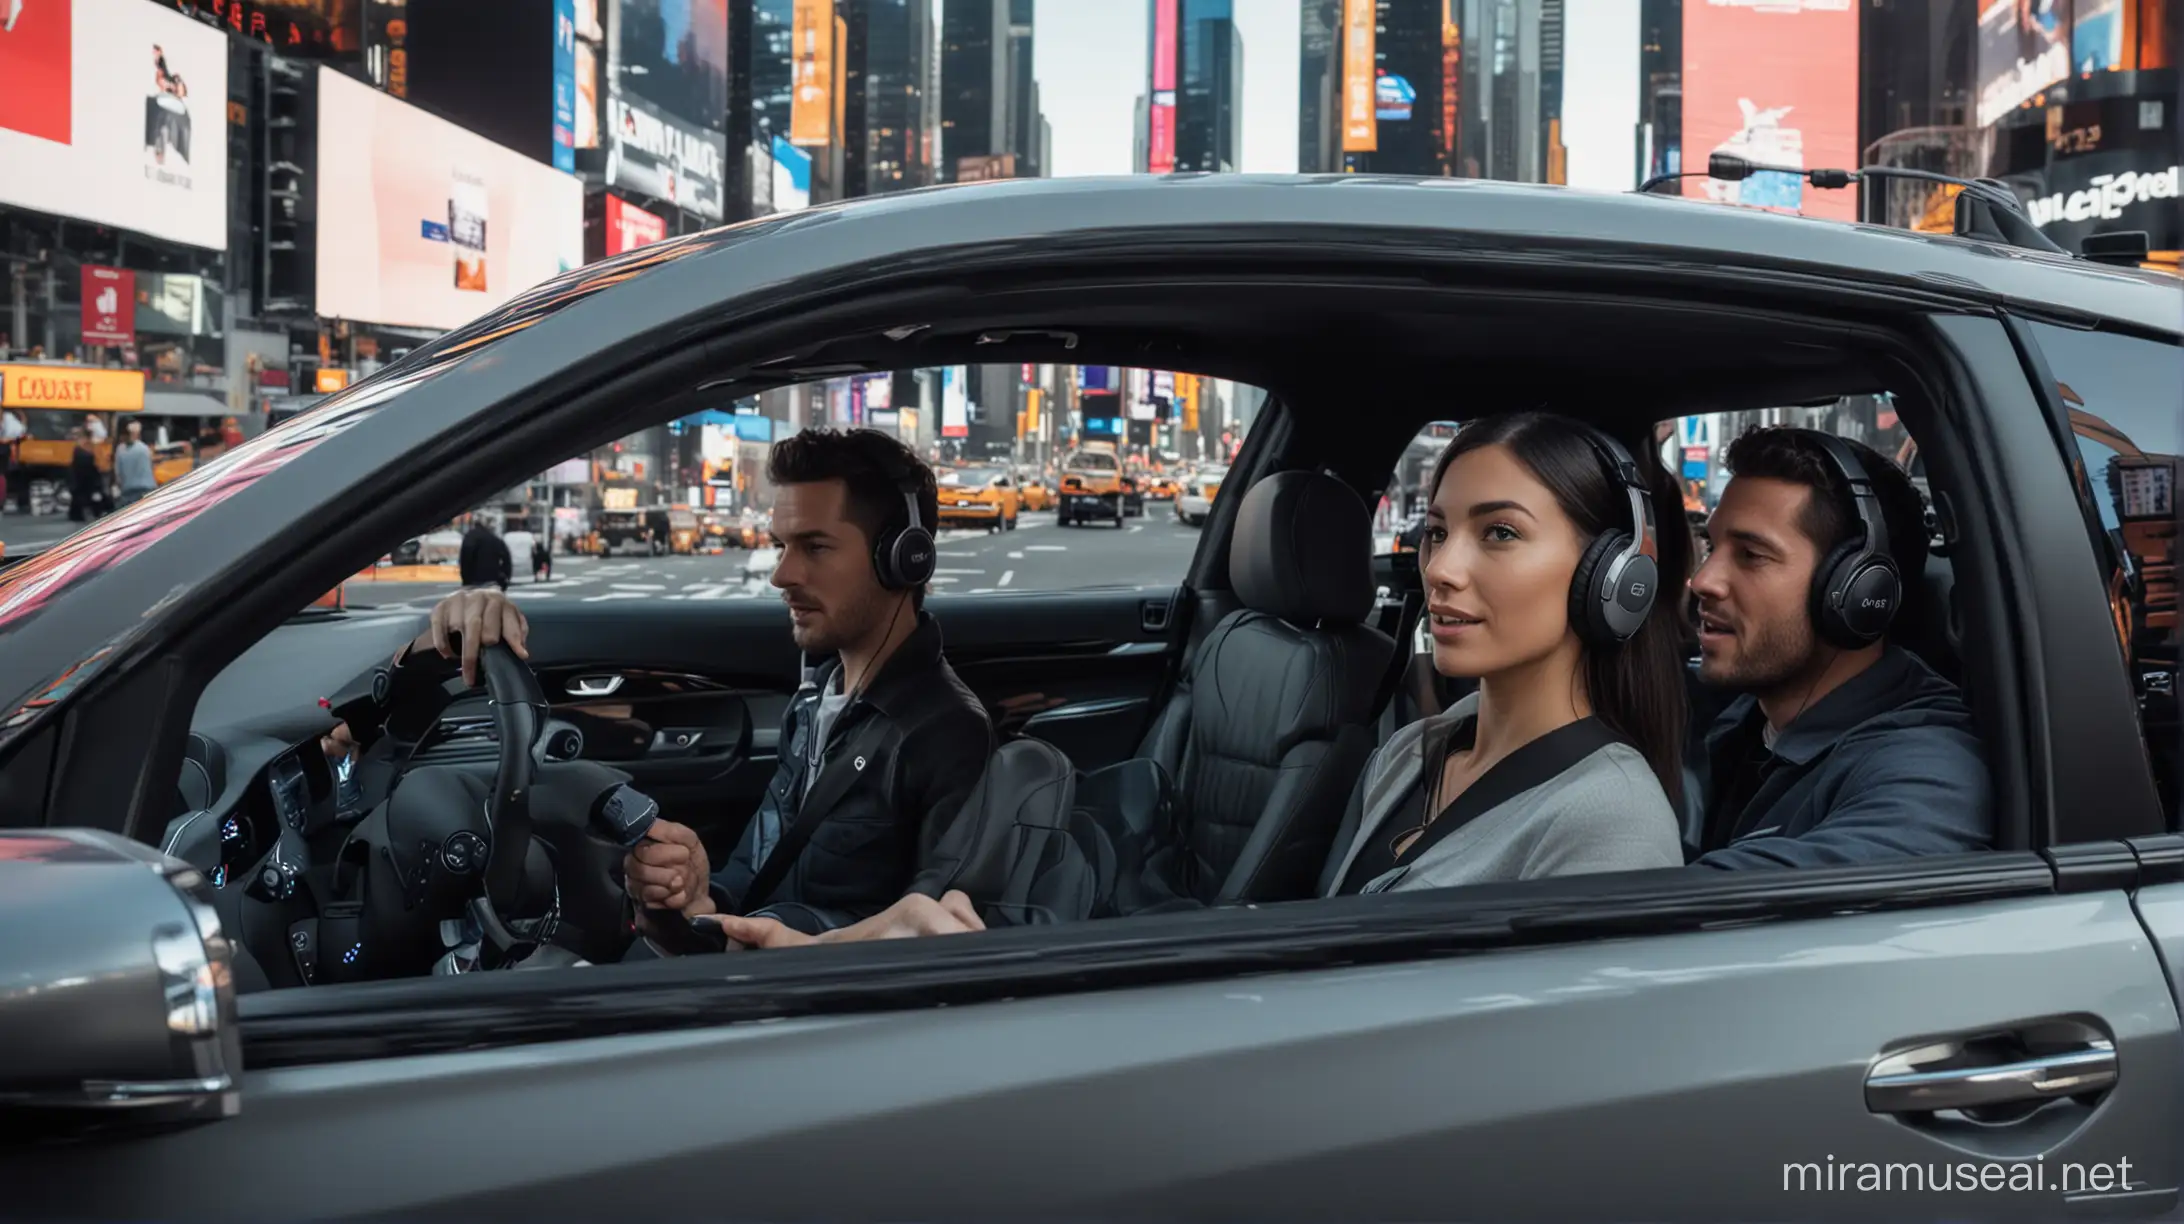 Podcast Recording in Cadillac LYRIQ Driving through Times Square